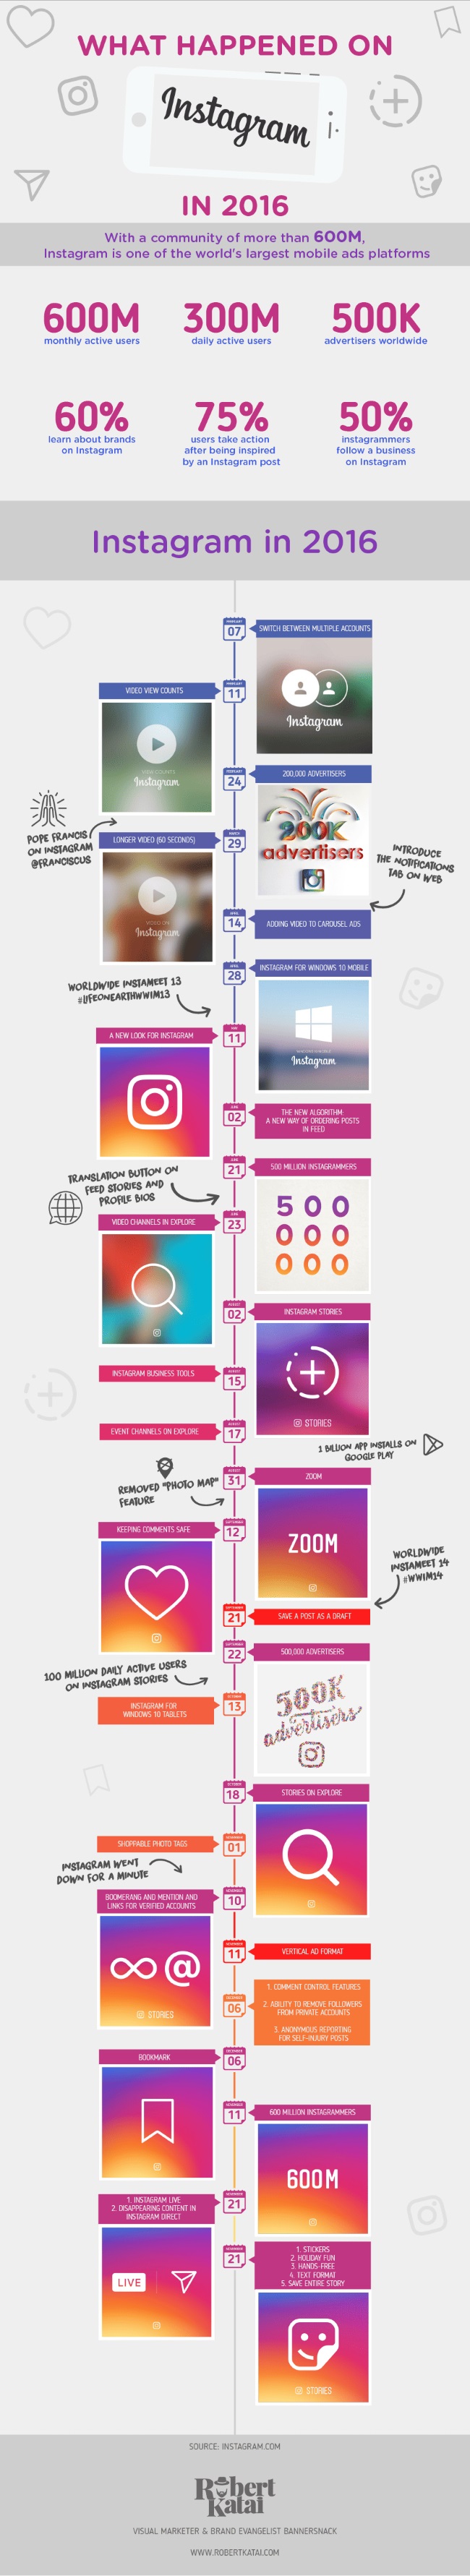 infografia-evolucion-instagram-2016